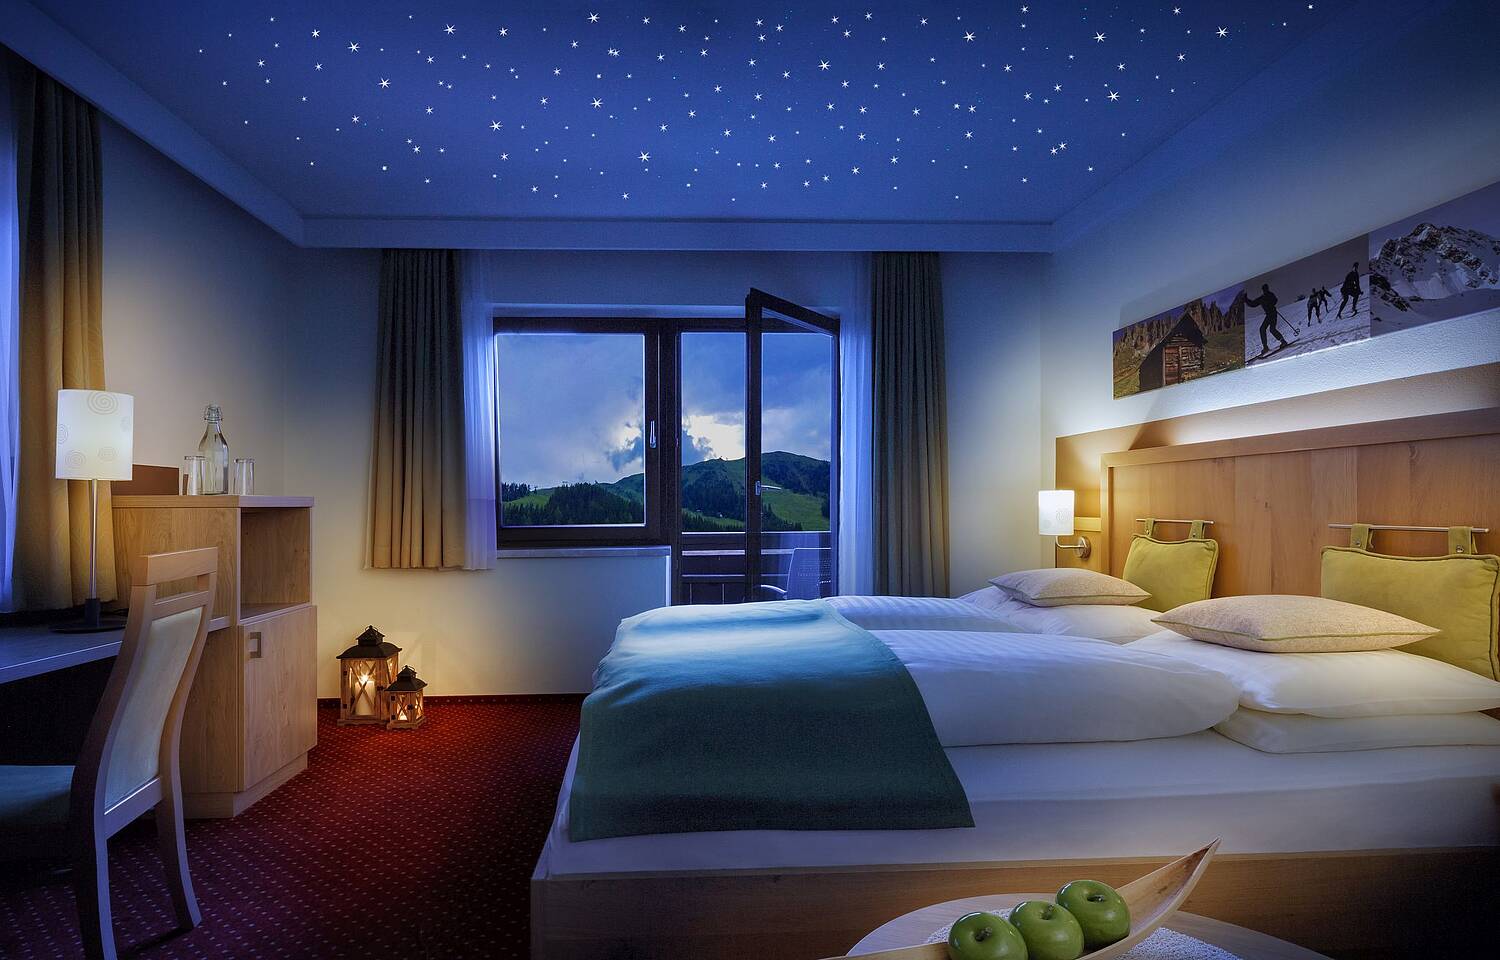 Doppelzimmer mit Sternenimmel im Hotel Laerchenhof Katschberg